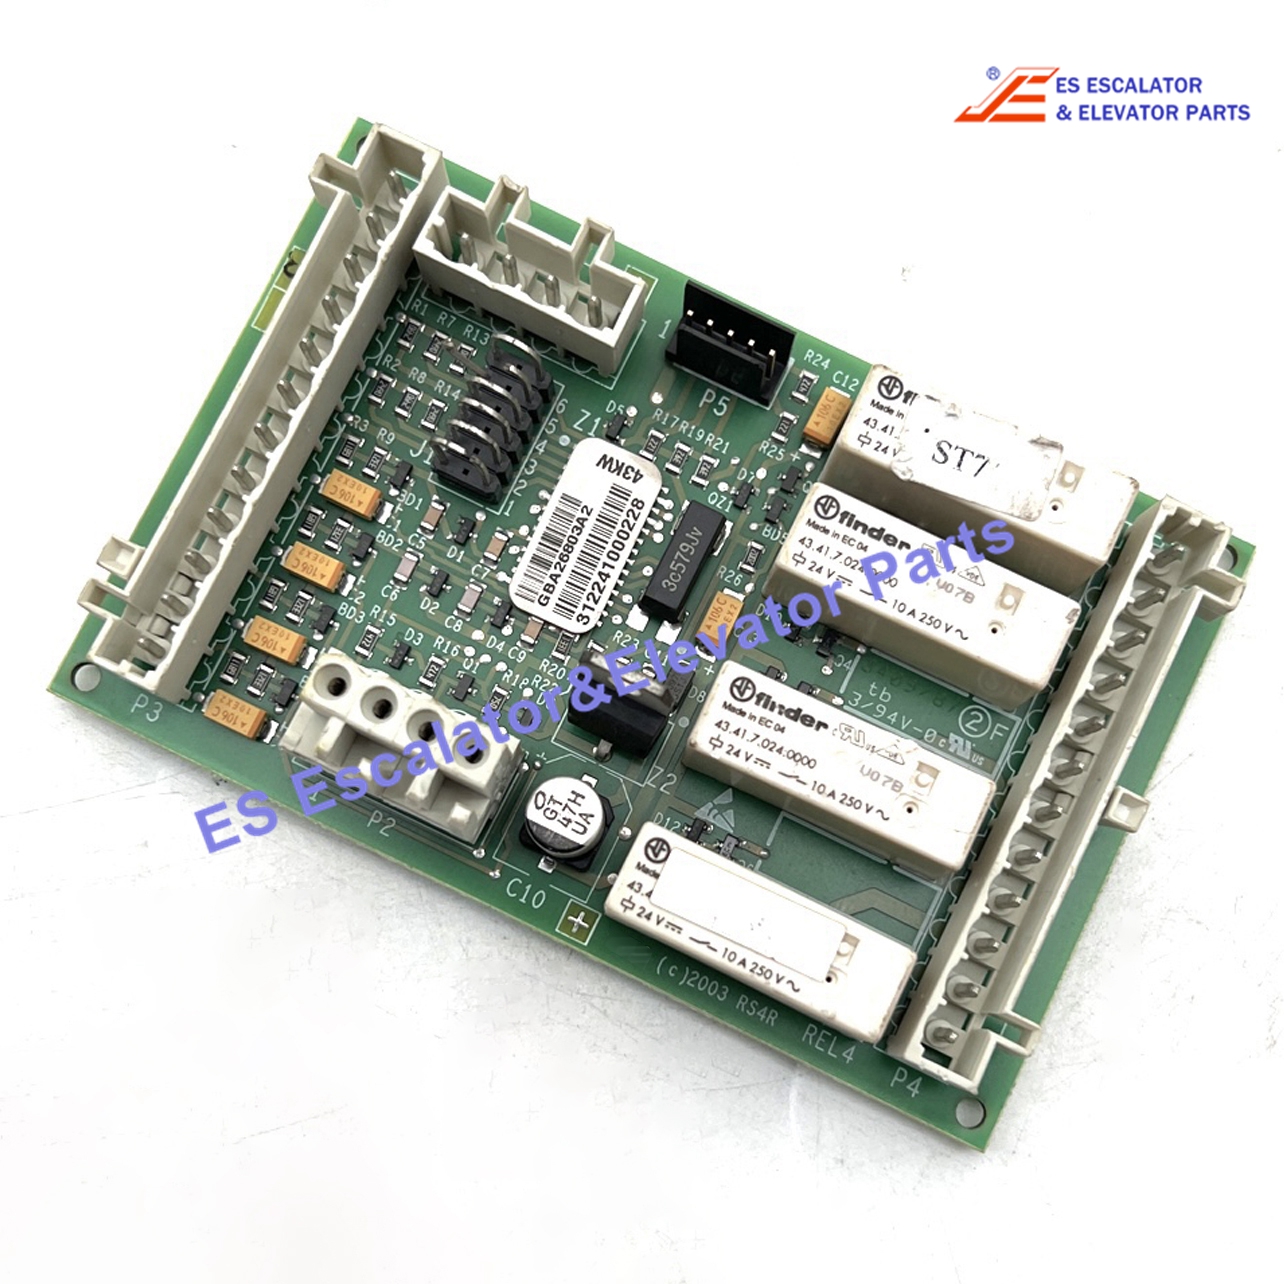 GAA26803A1 Elevator PCB Board RS4R Main Board Use For Otis